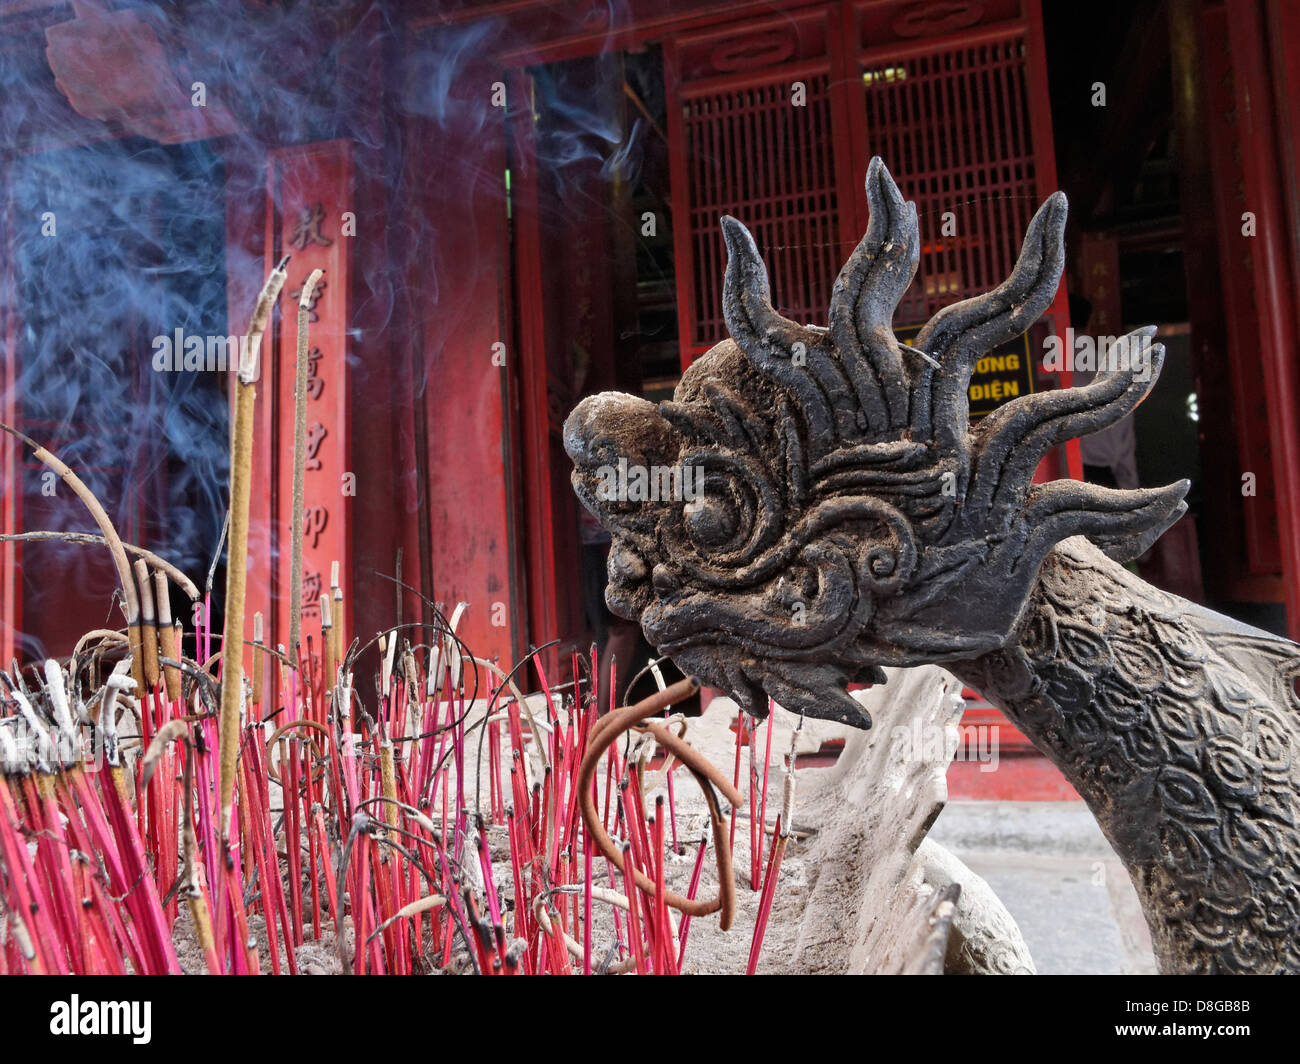 Burning incense at the Temple of Literature, Hanoi, Vietnam. Stock Photo